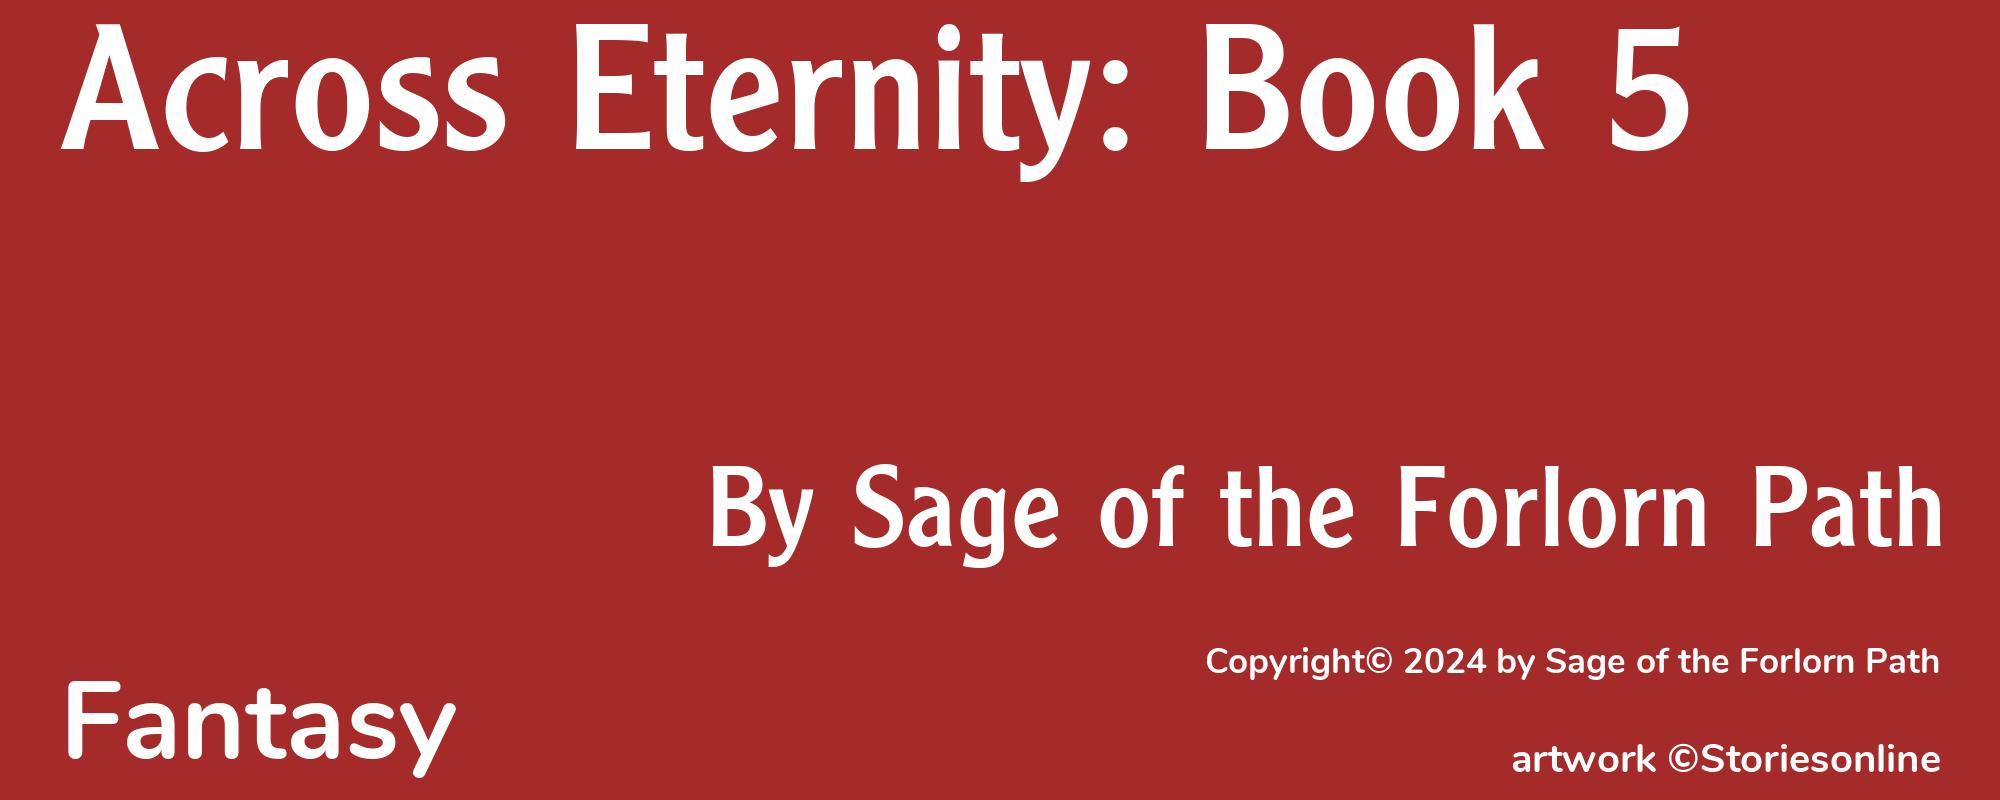 Across Eternity: Book 5 - Cover